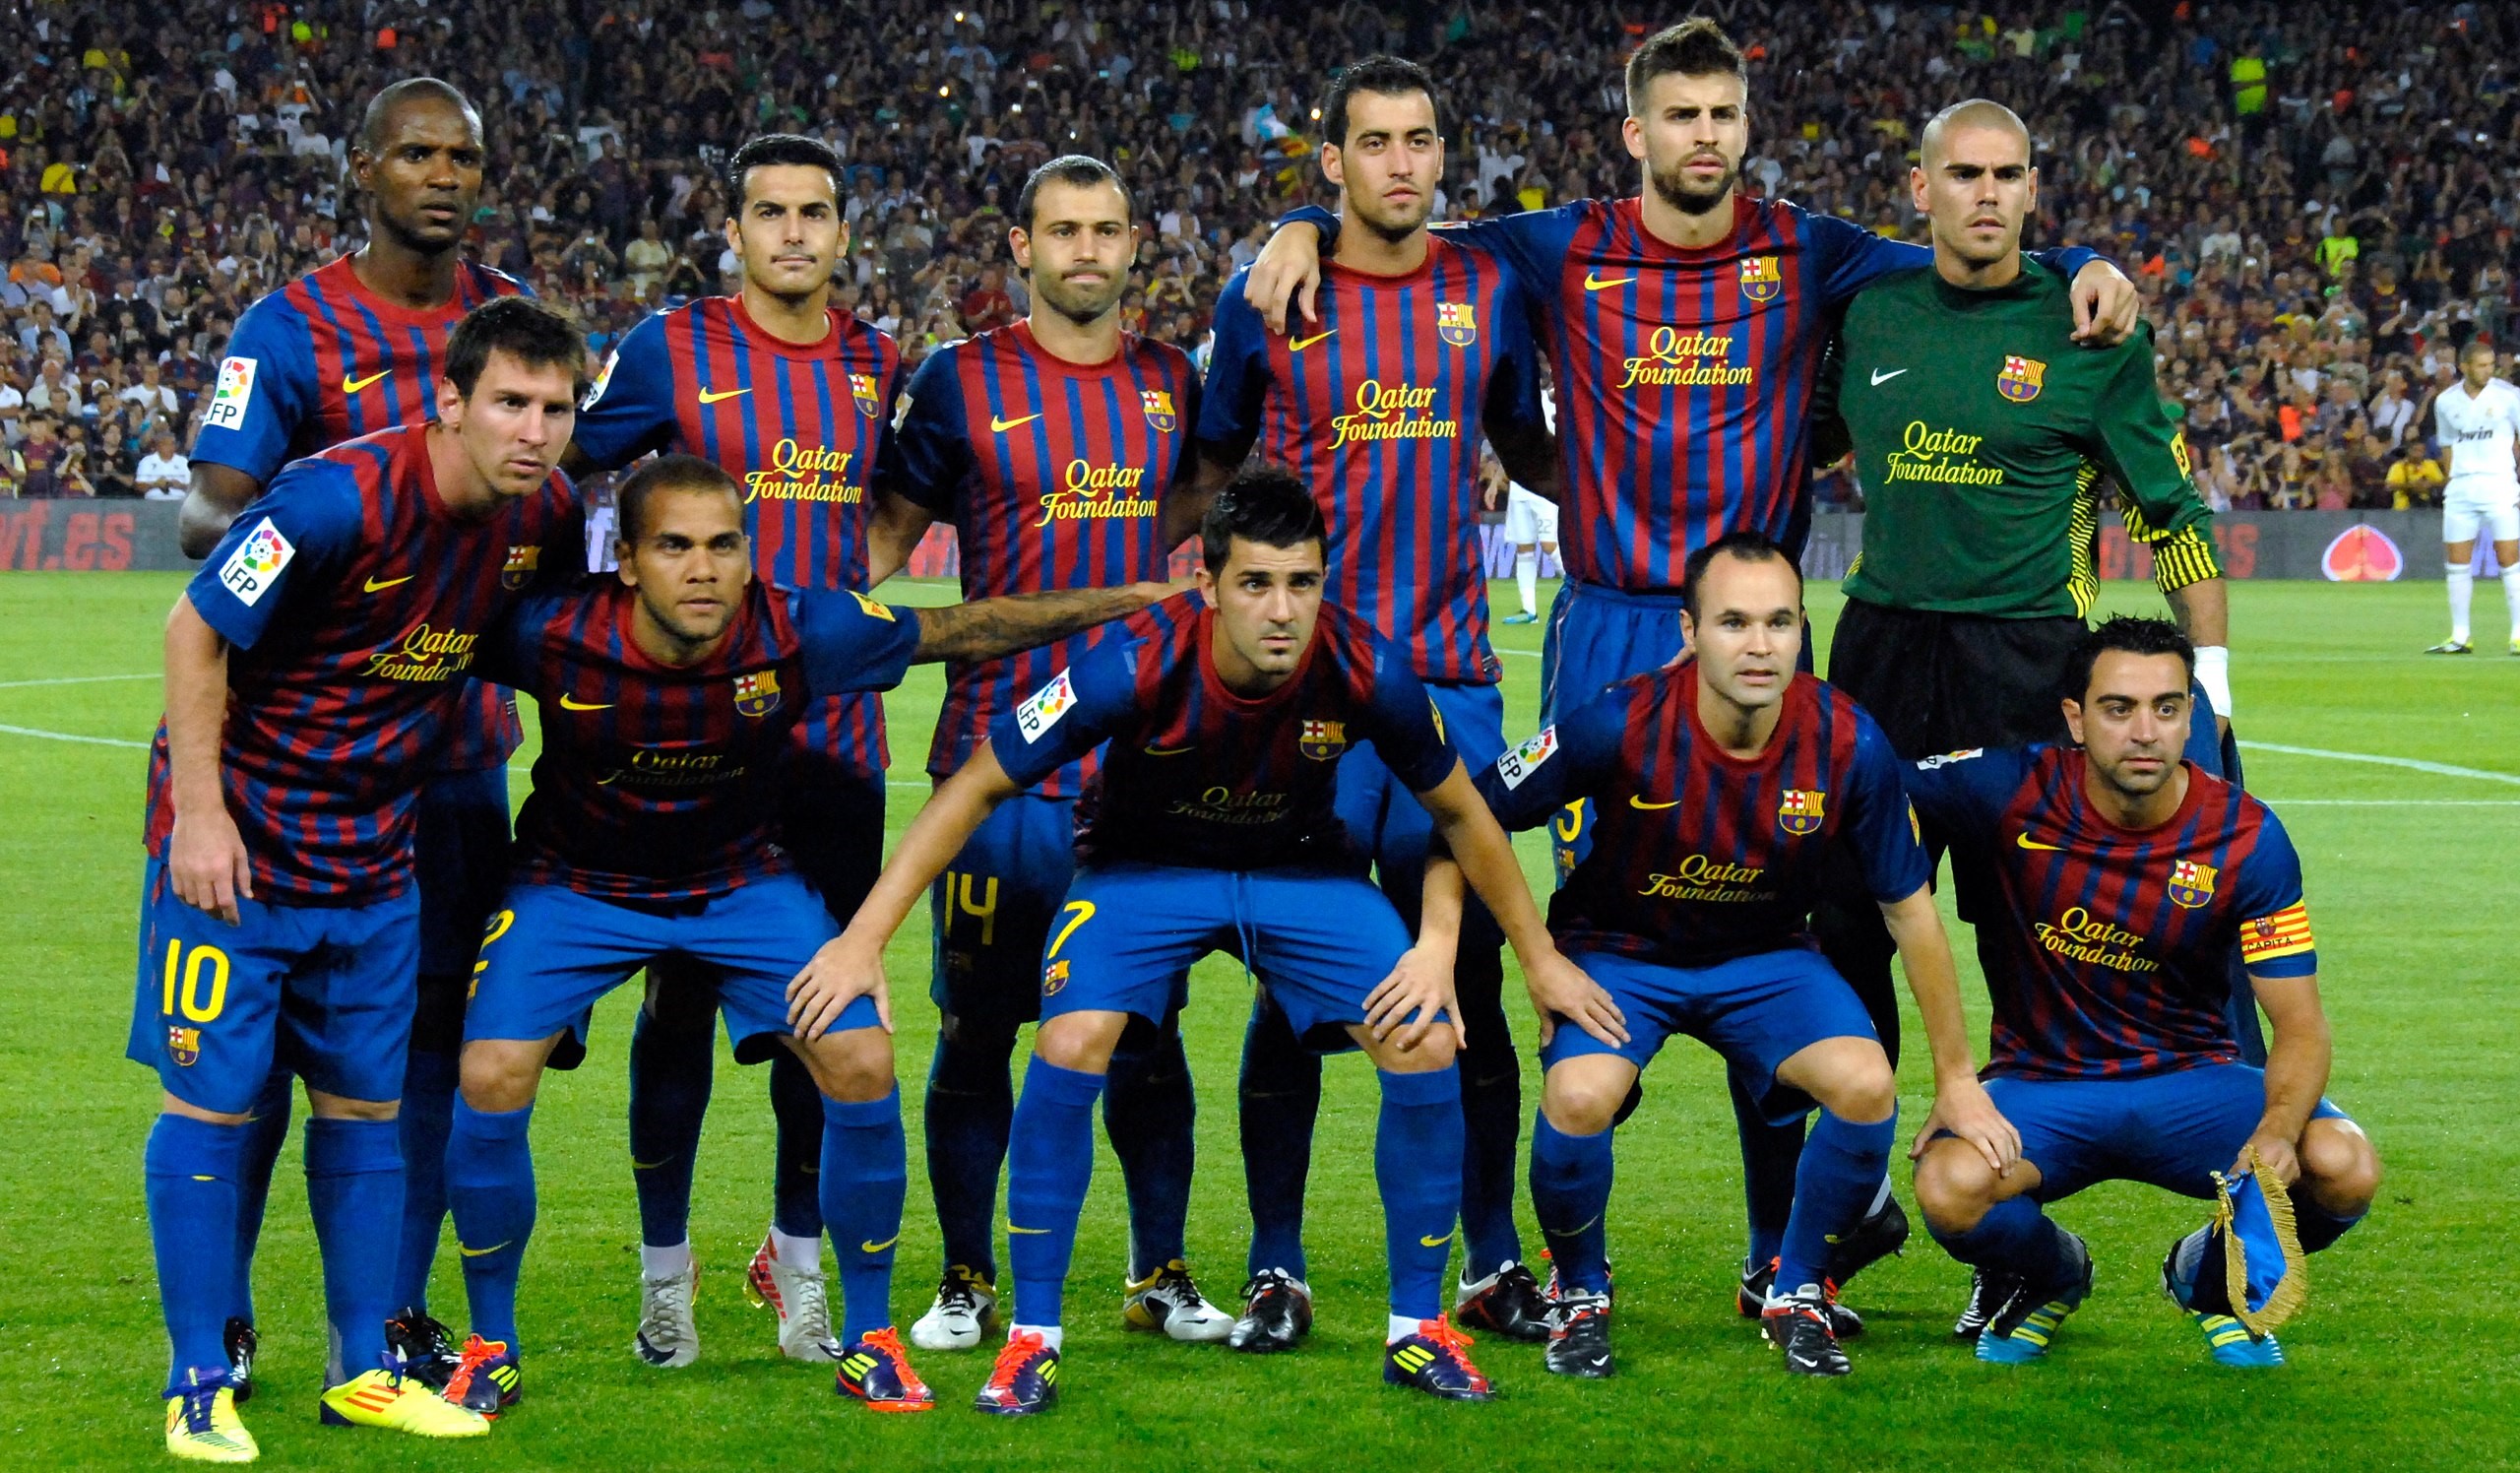 FC Barcelona, winner of the 2011 Supercopa de España